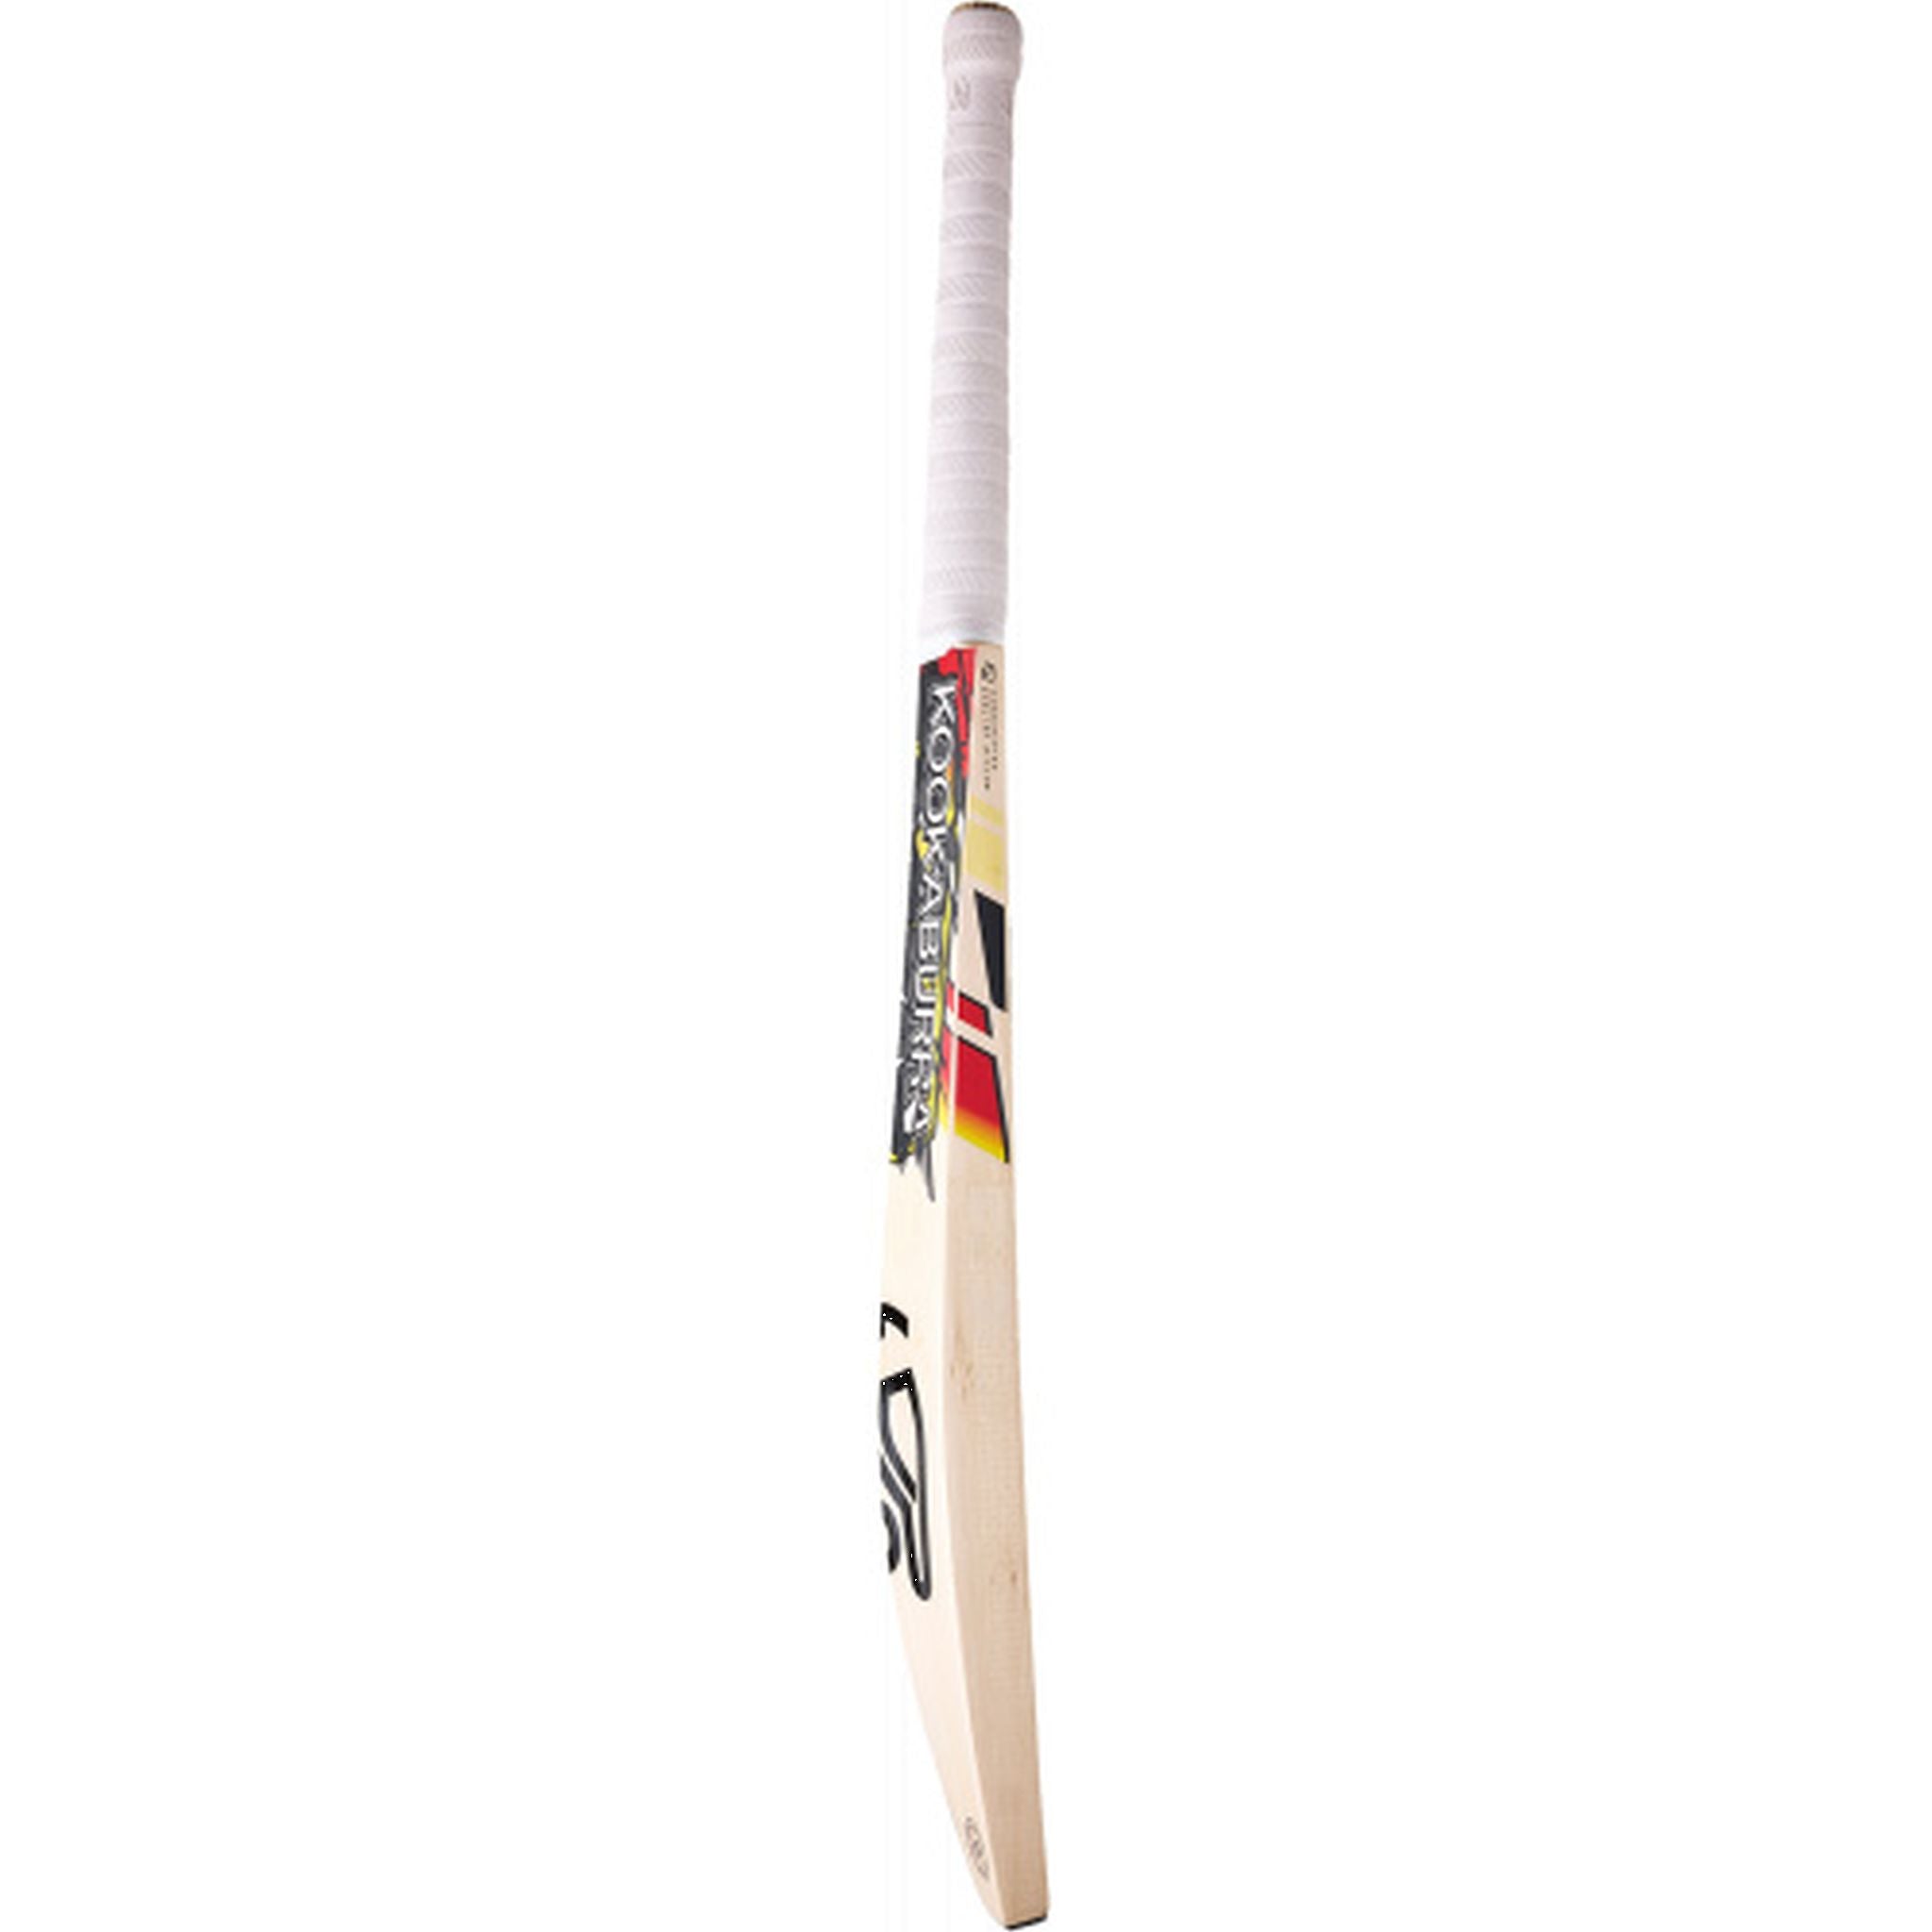 Kookaburra Beast Pro 6.0 Junior Cricket Bat